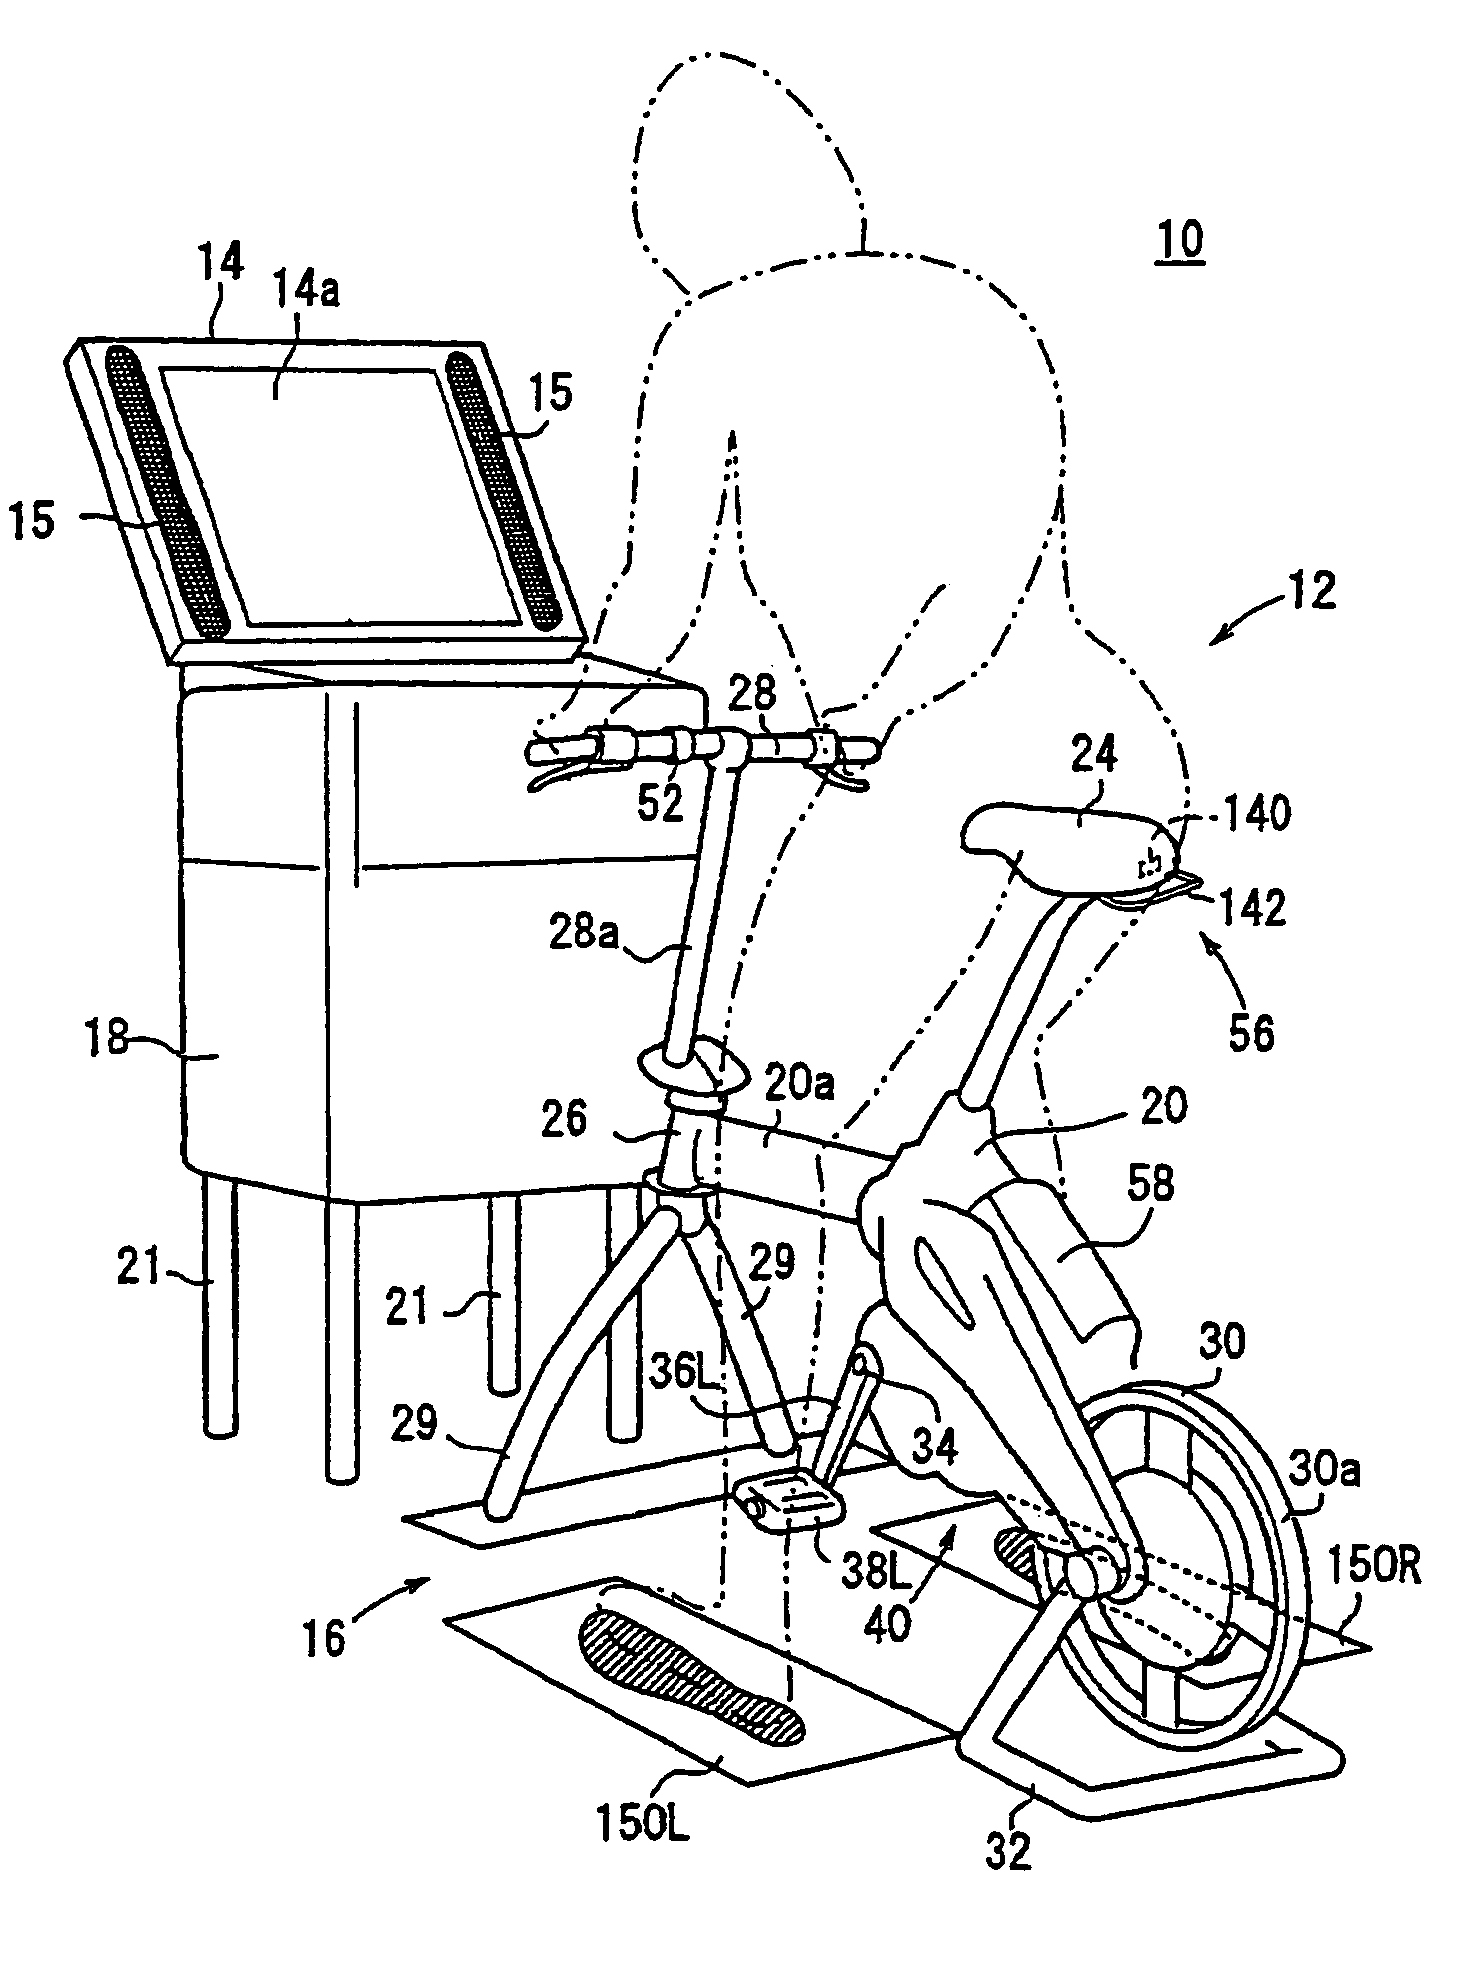 Bicycle simulation apparatus